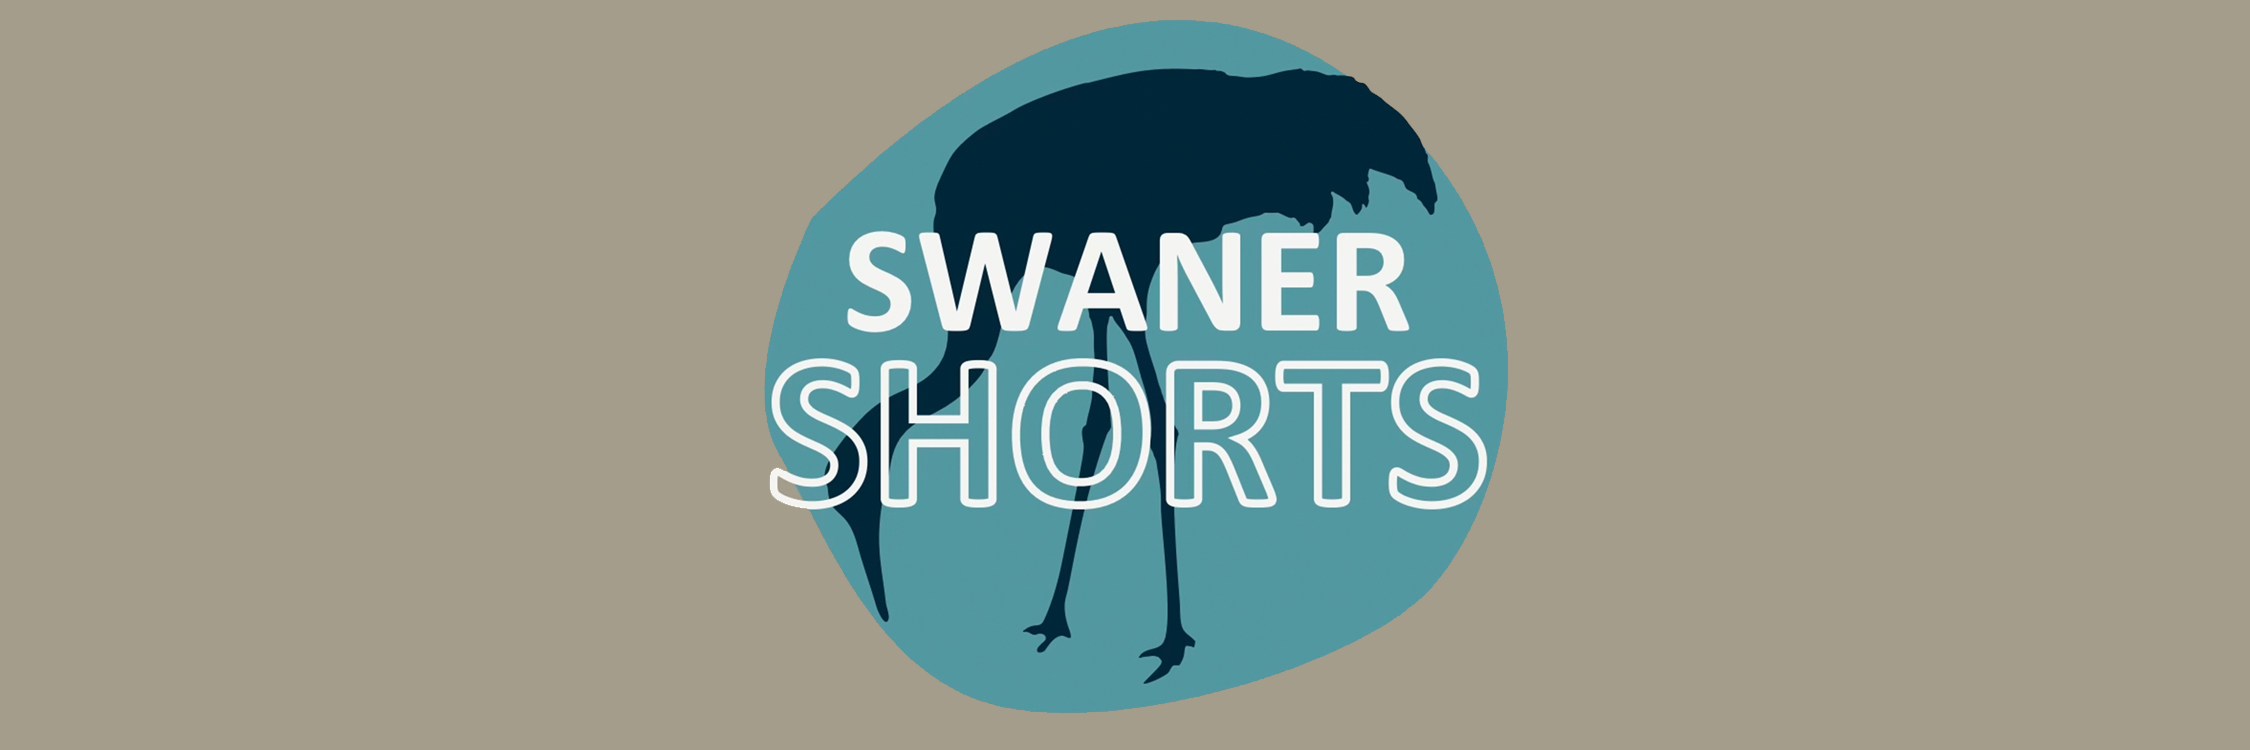 Swaner Shorts